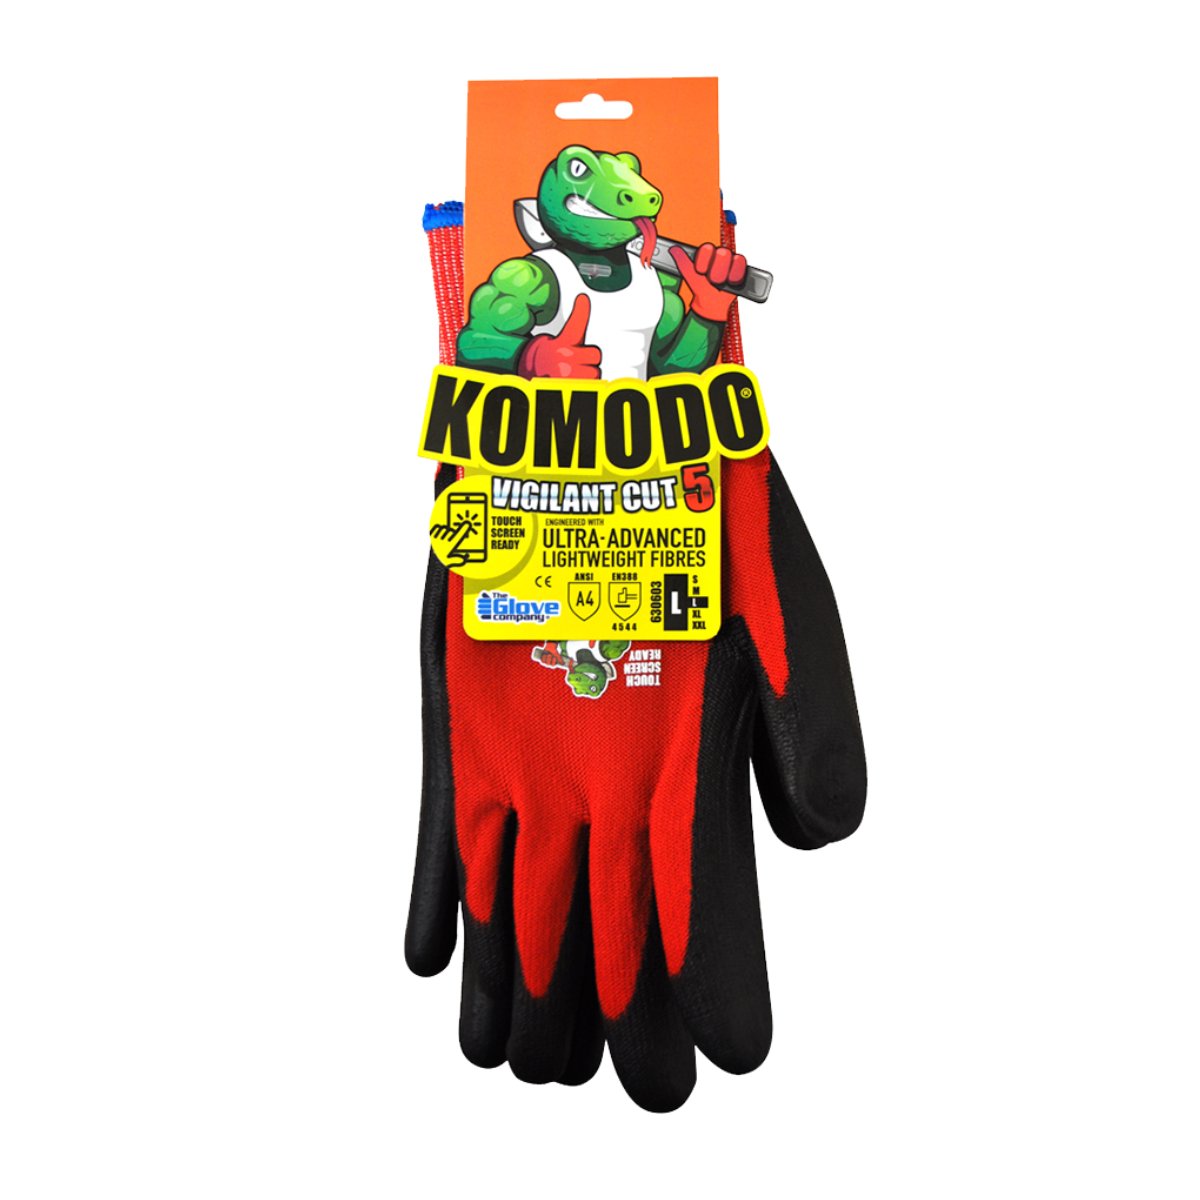 TGC KOMODO® Vigilant® Cut 5 Gloves 63060 (Pack of 12)